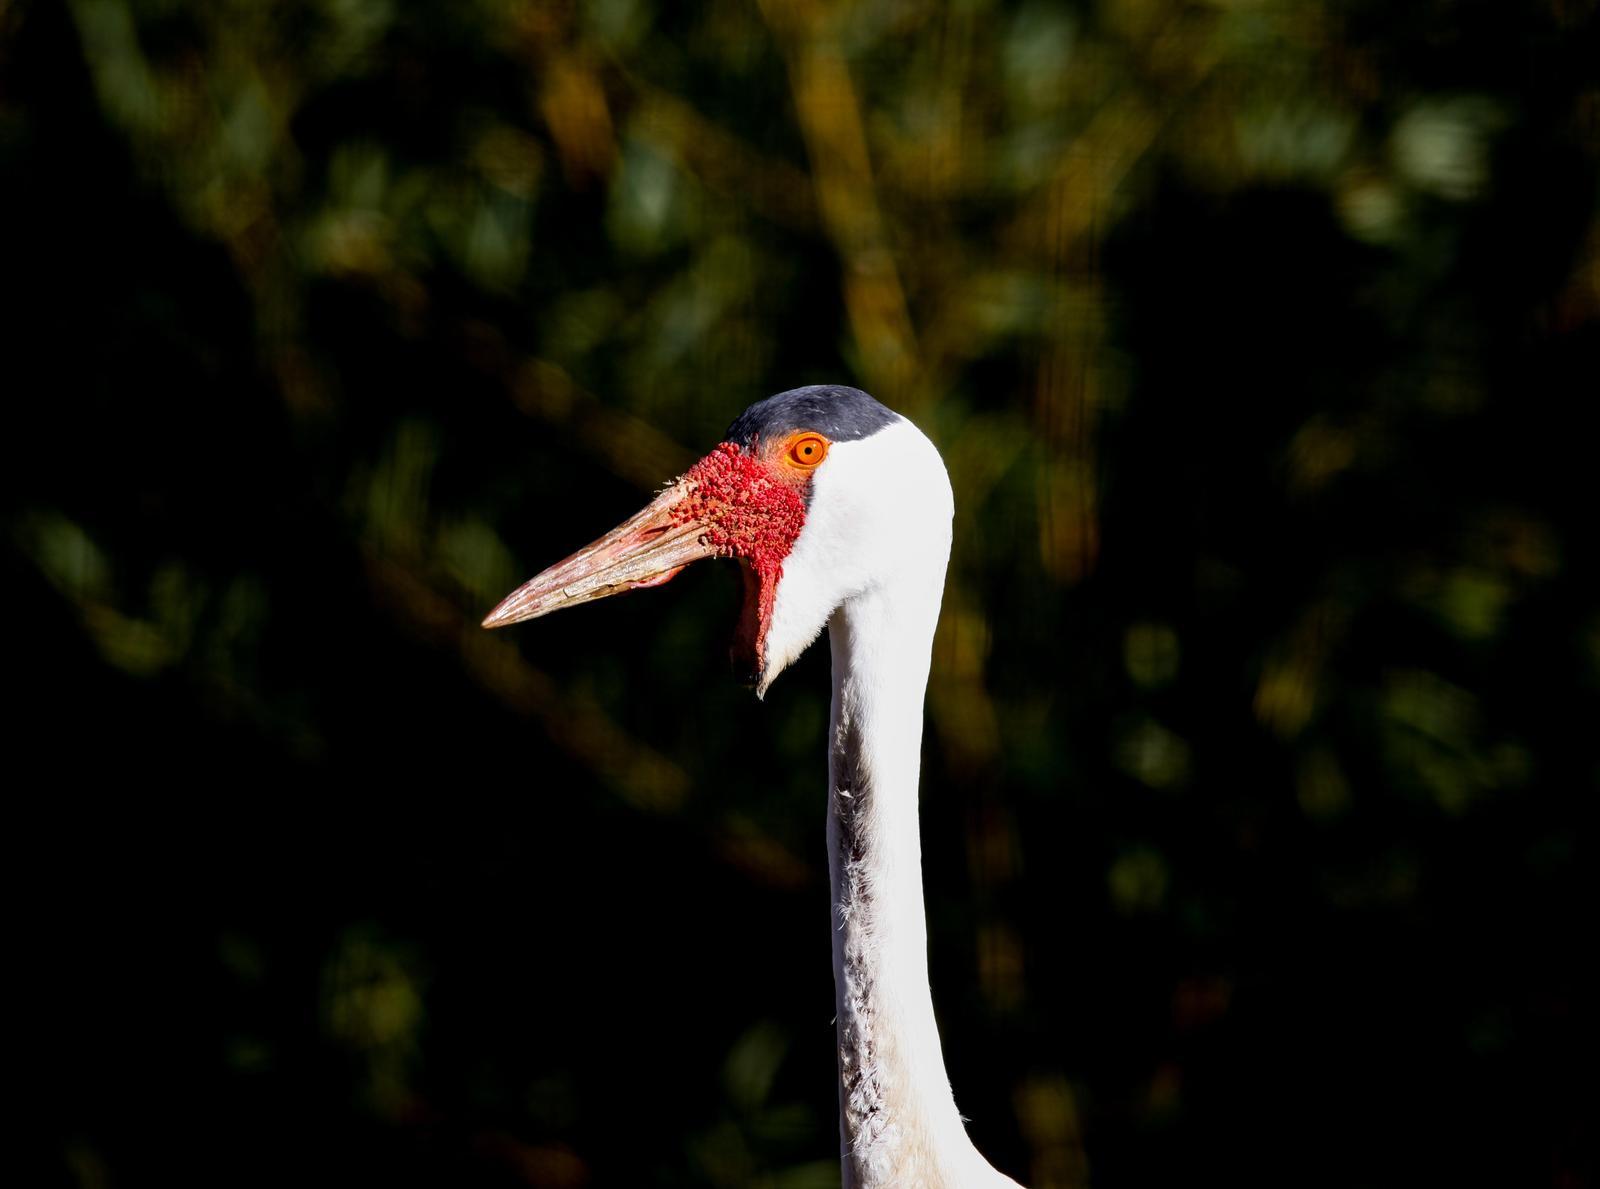 Wattled Crane Photo by Lucy Wightman